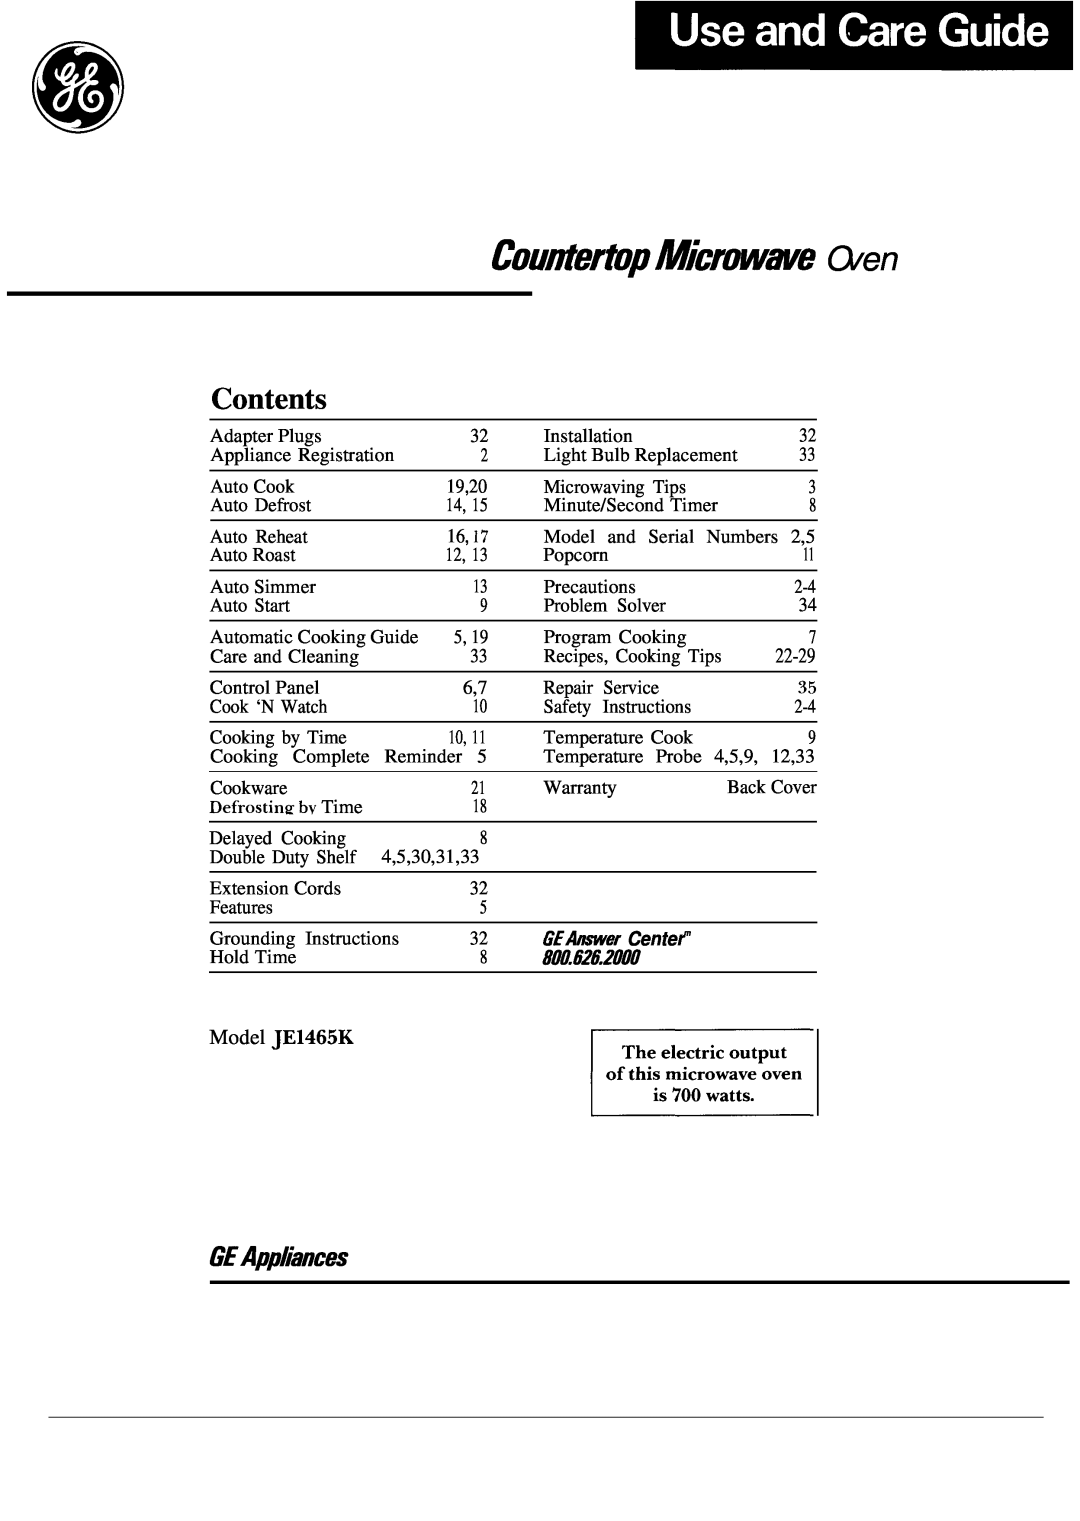 GE JE1465K manual Contents, CouMertipMicrwwe Oven, GEAppiances, GEAmer Centerm, 80~6262000 